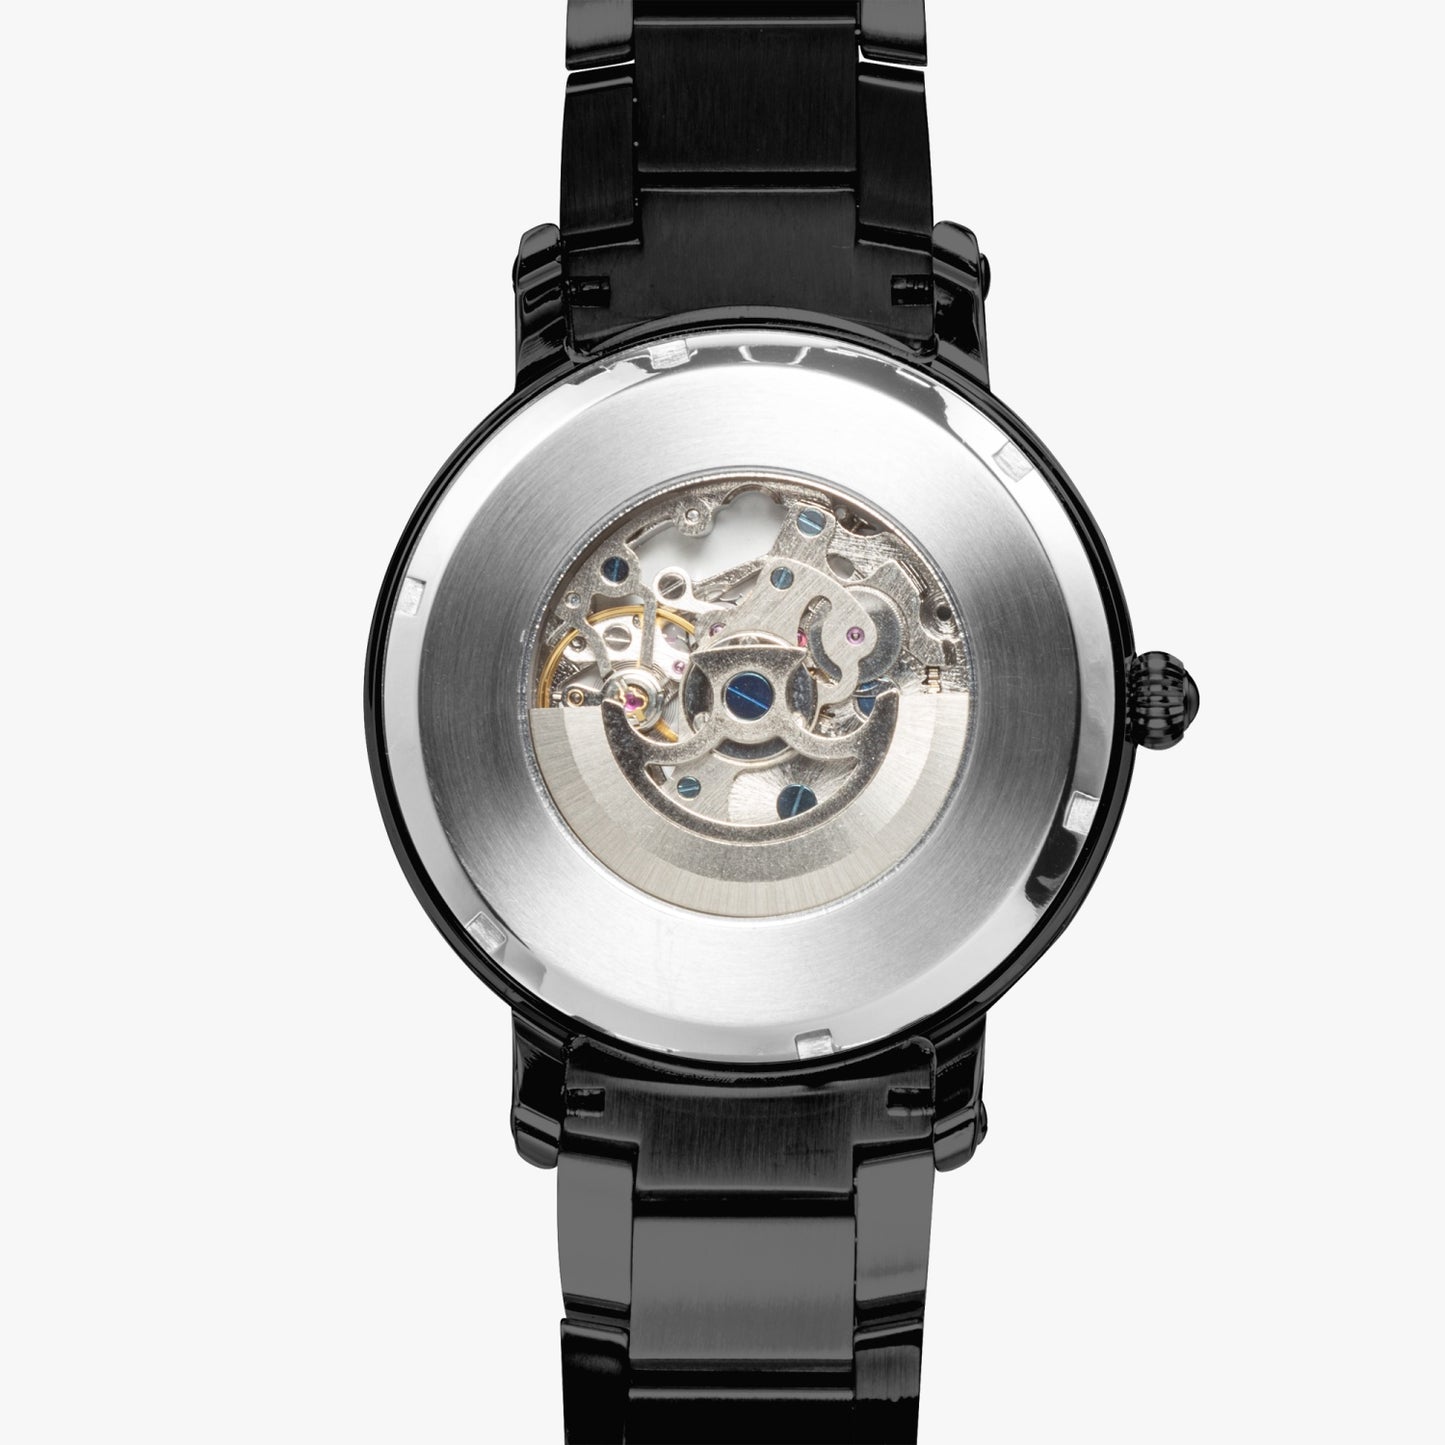 Sardegna Italia Automatic Movement Watch - Premium Stainless Steel